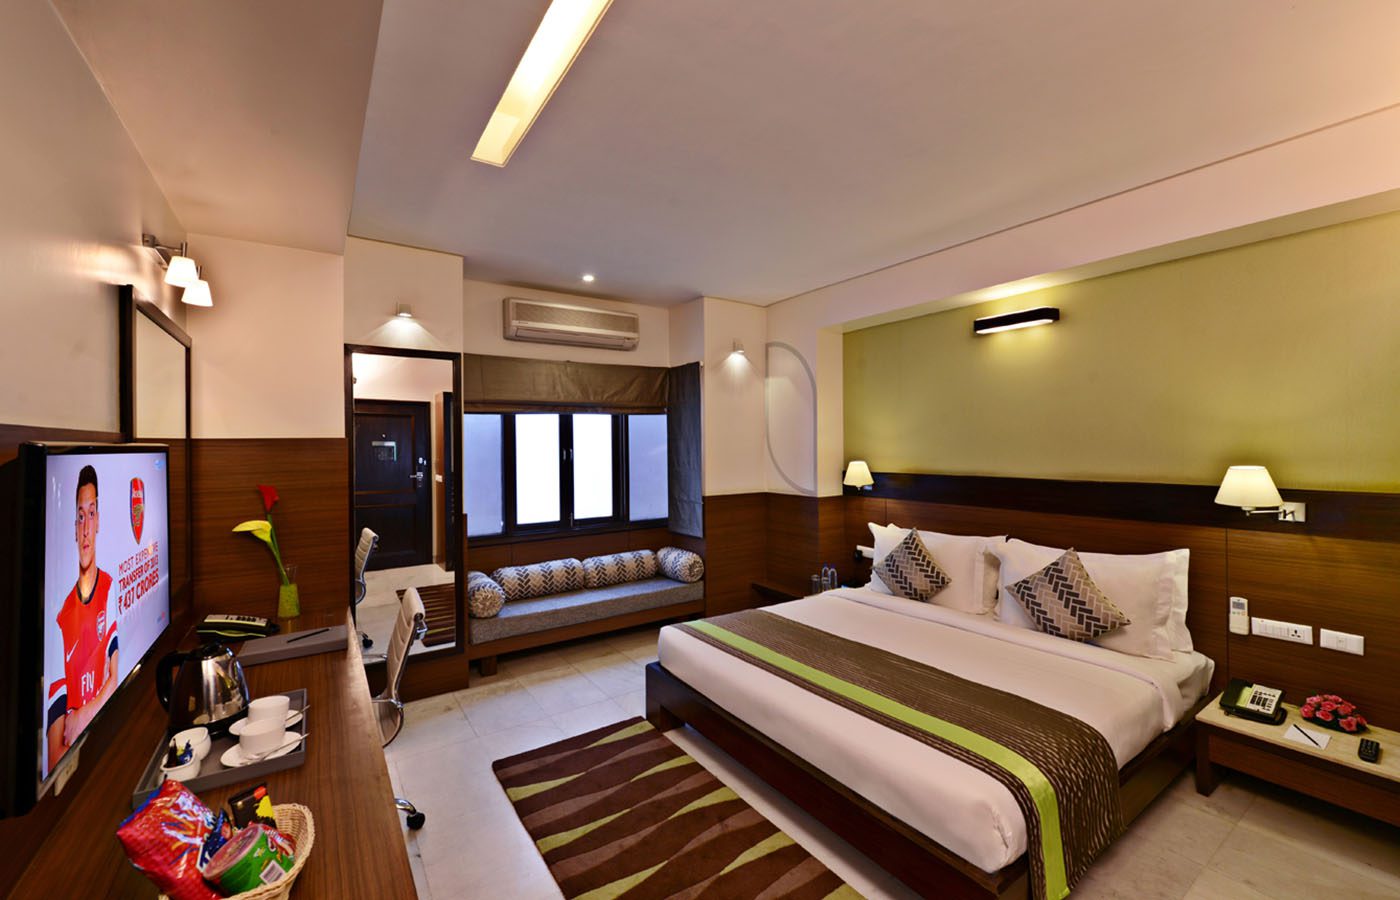 Leisure Inn Room double bed